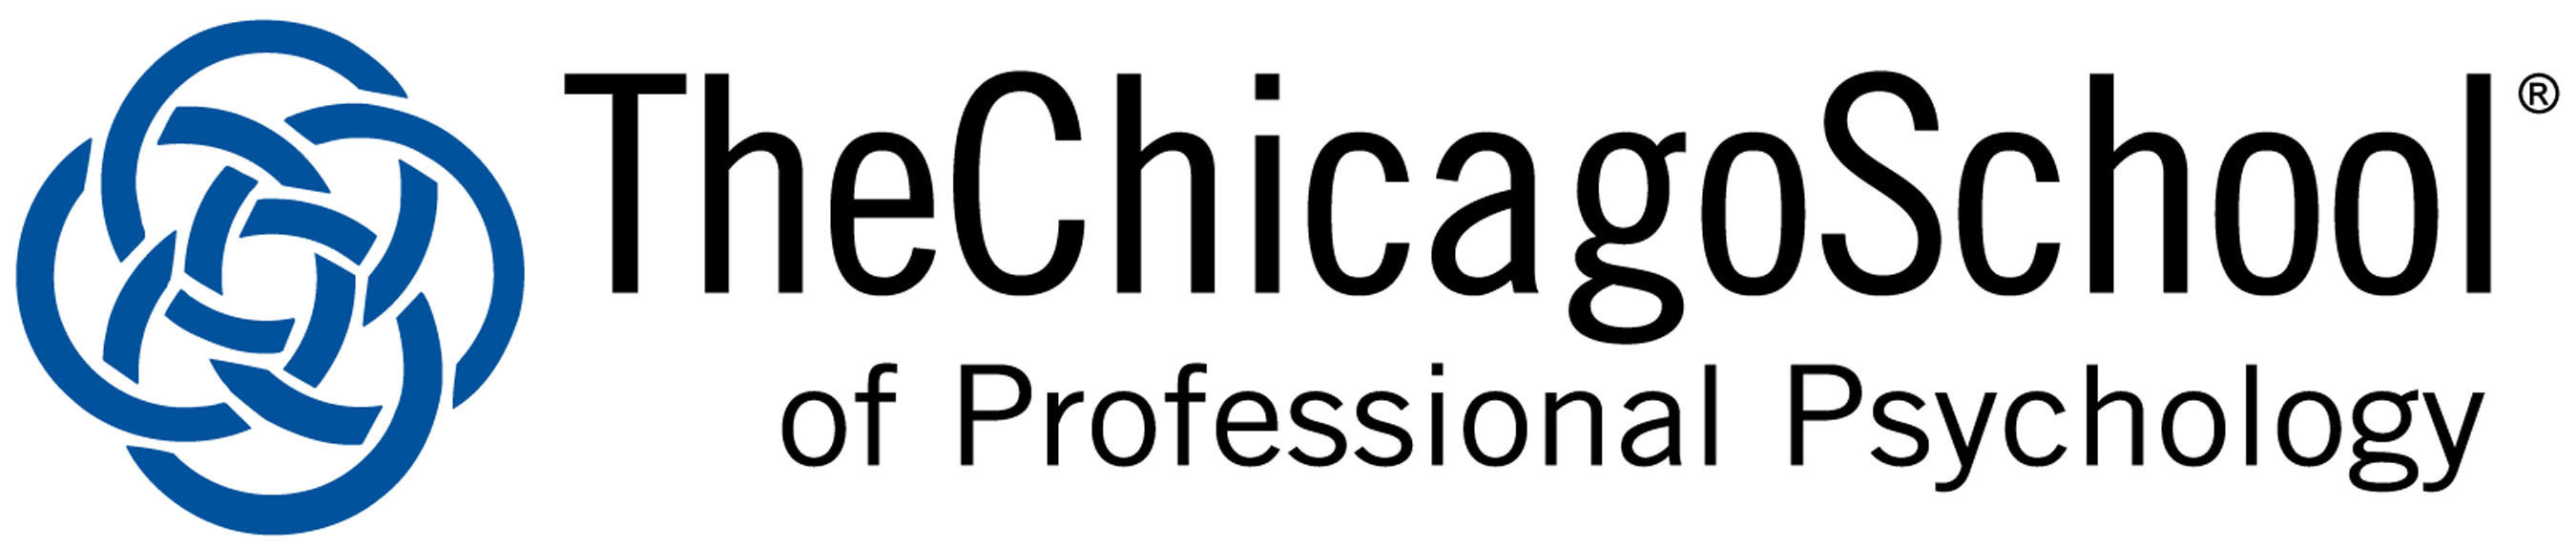 The Chicago School of Professional Psychology logo. (PRNewsFoto/The Chicago School of Professional Psychology) (PRNewsFoto/)